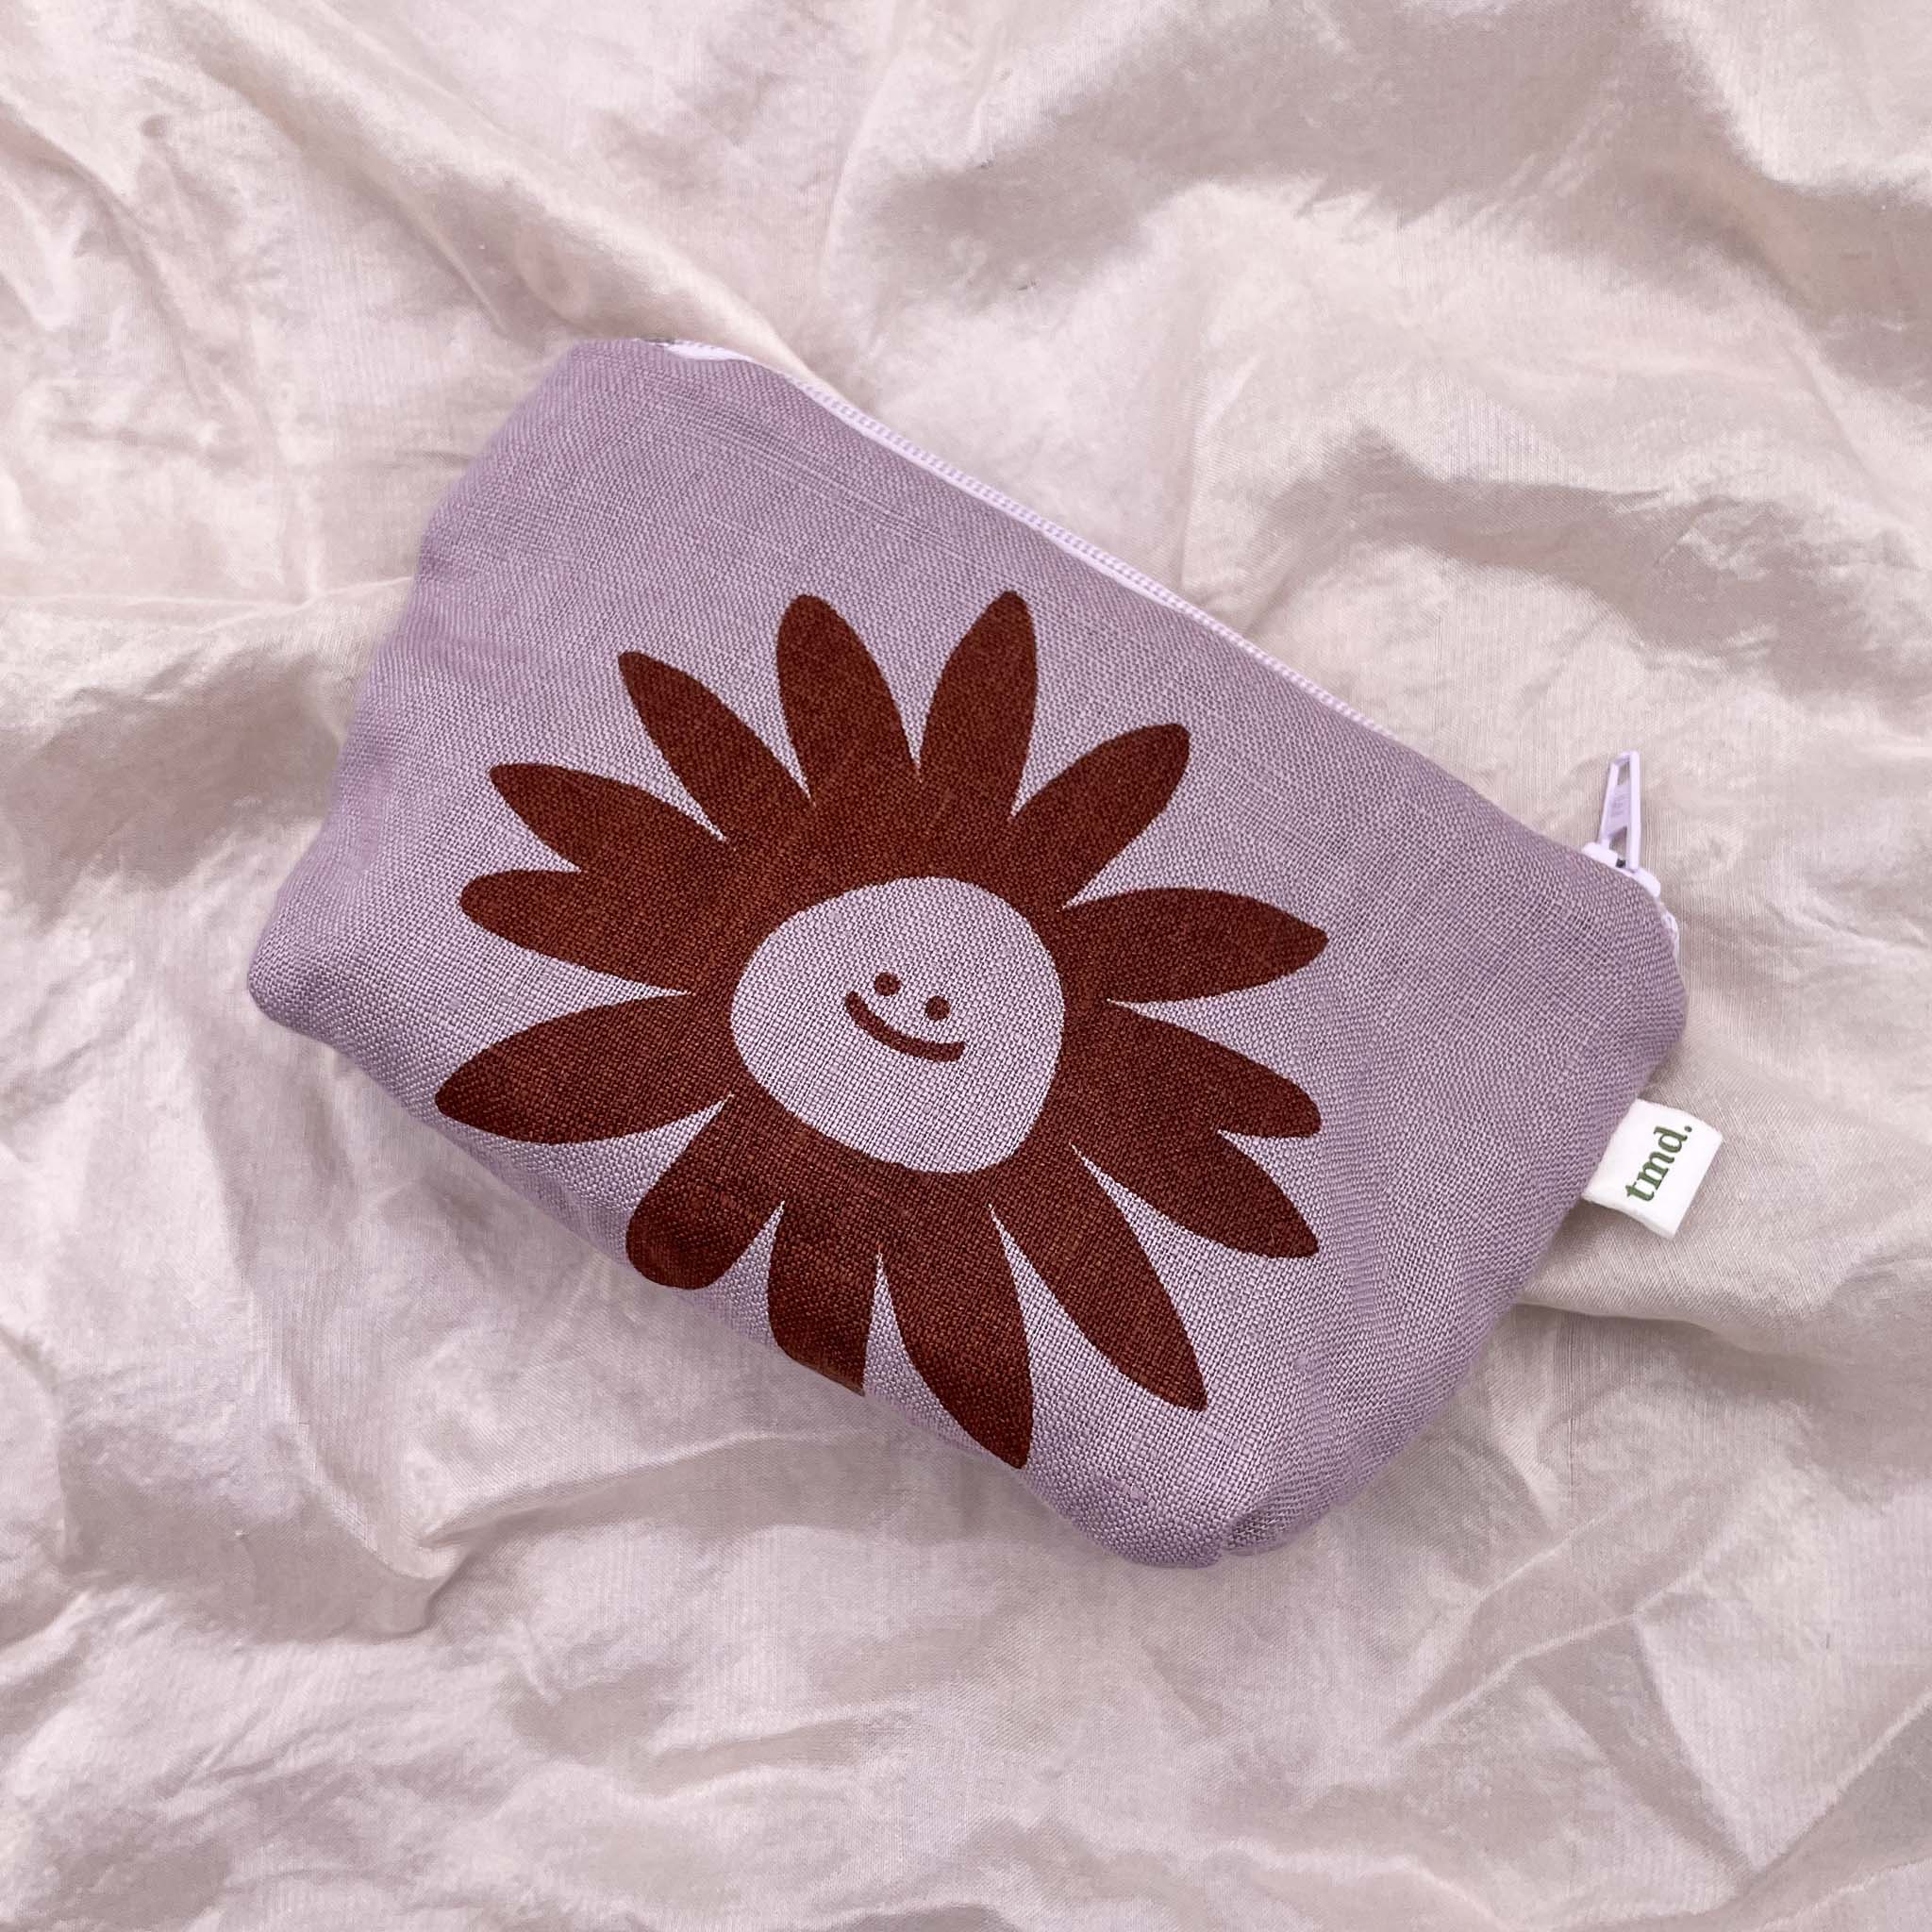 Little Bag - Smiley Sun Face on Dusty Lilac